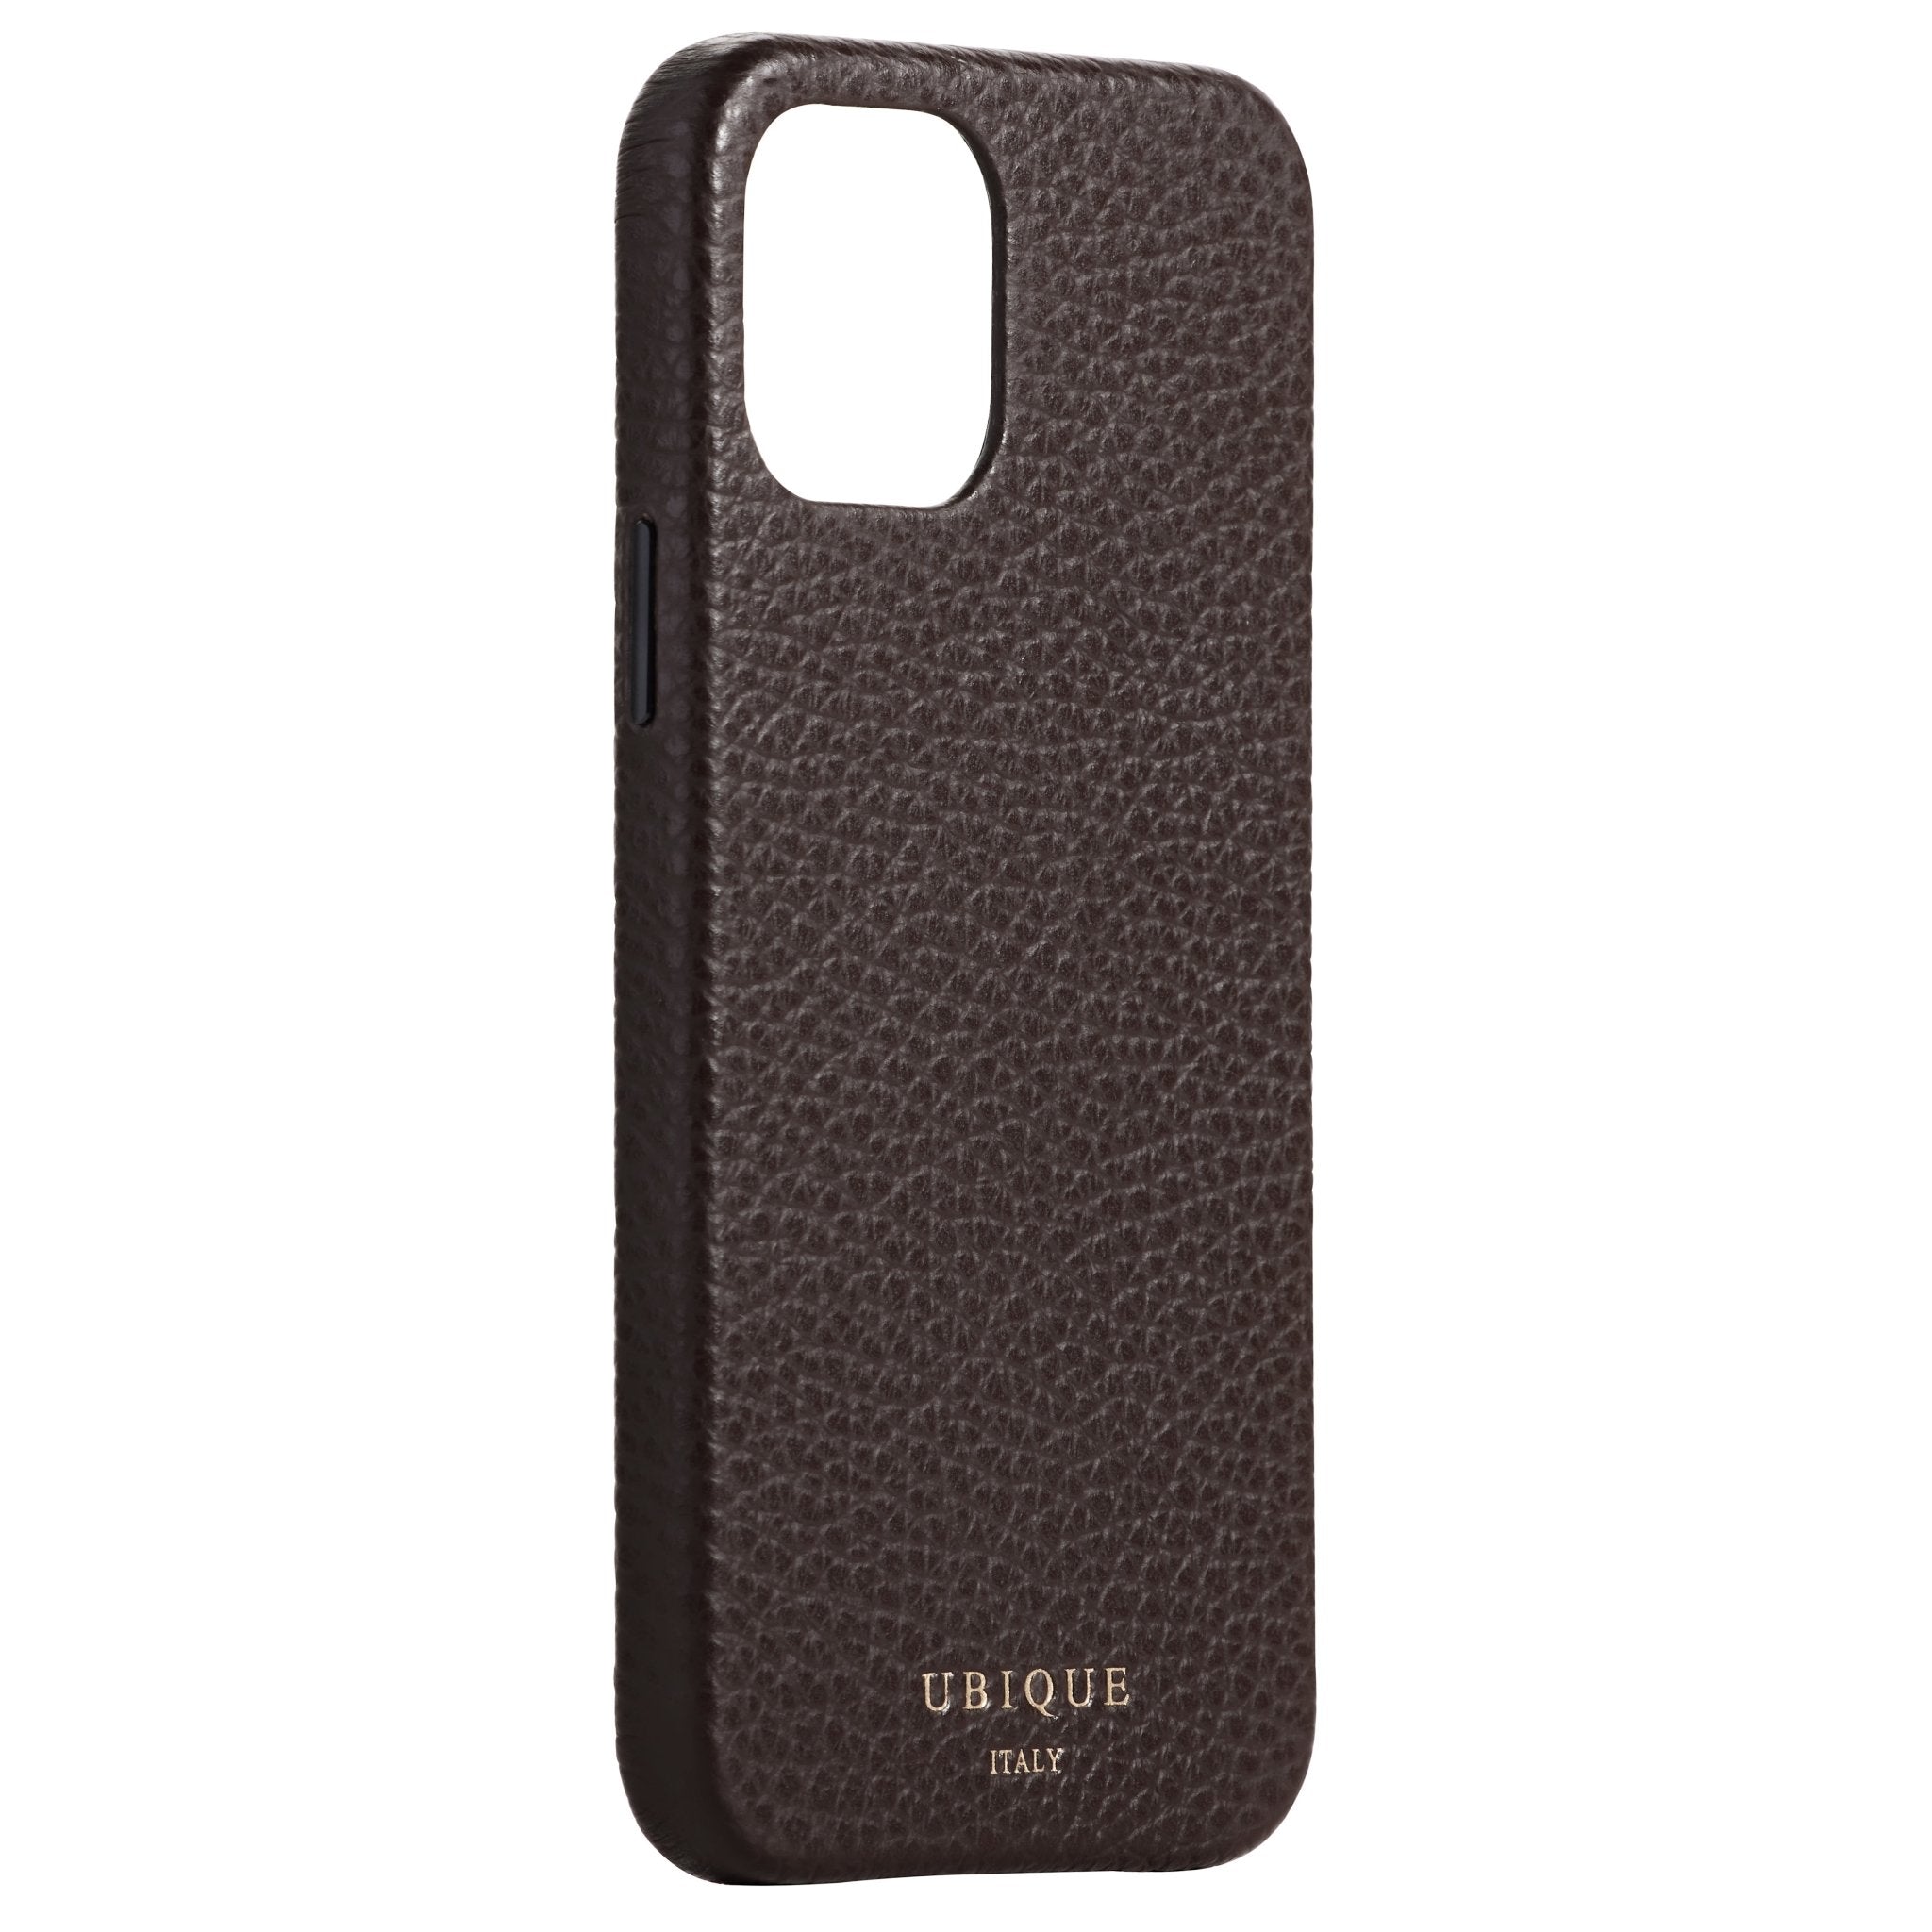 Ubique Italy Luxury iPhone Case 12 Pebble Grain Leather Dark Walnut Angled